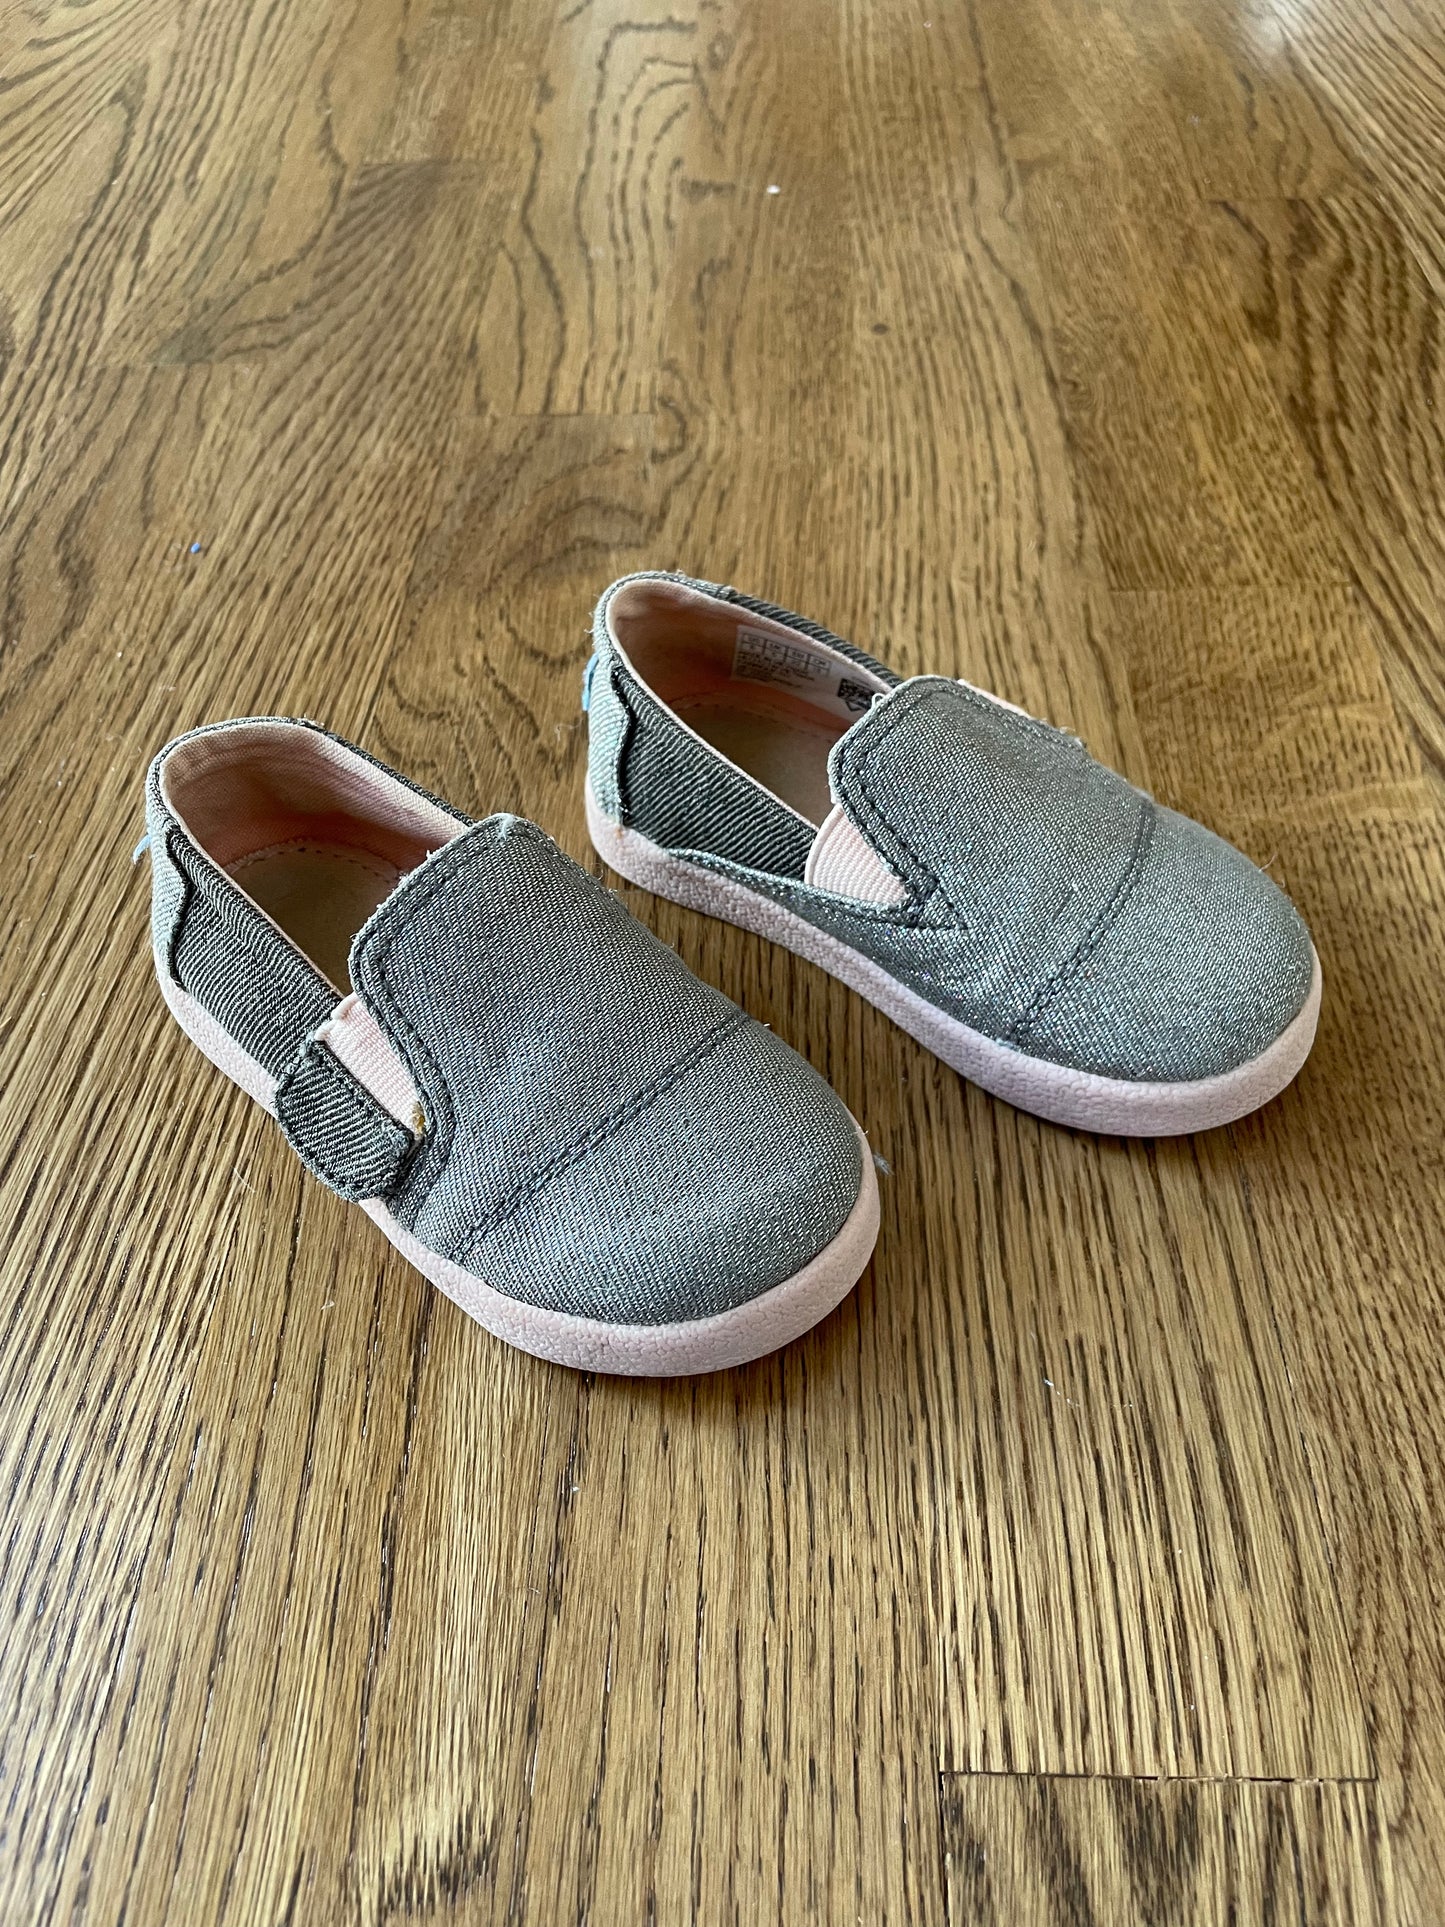 Toms Girls Shimmer Grey/Pink shoe toddler size 6